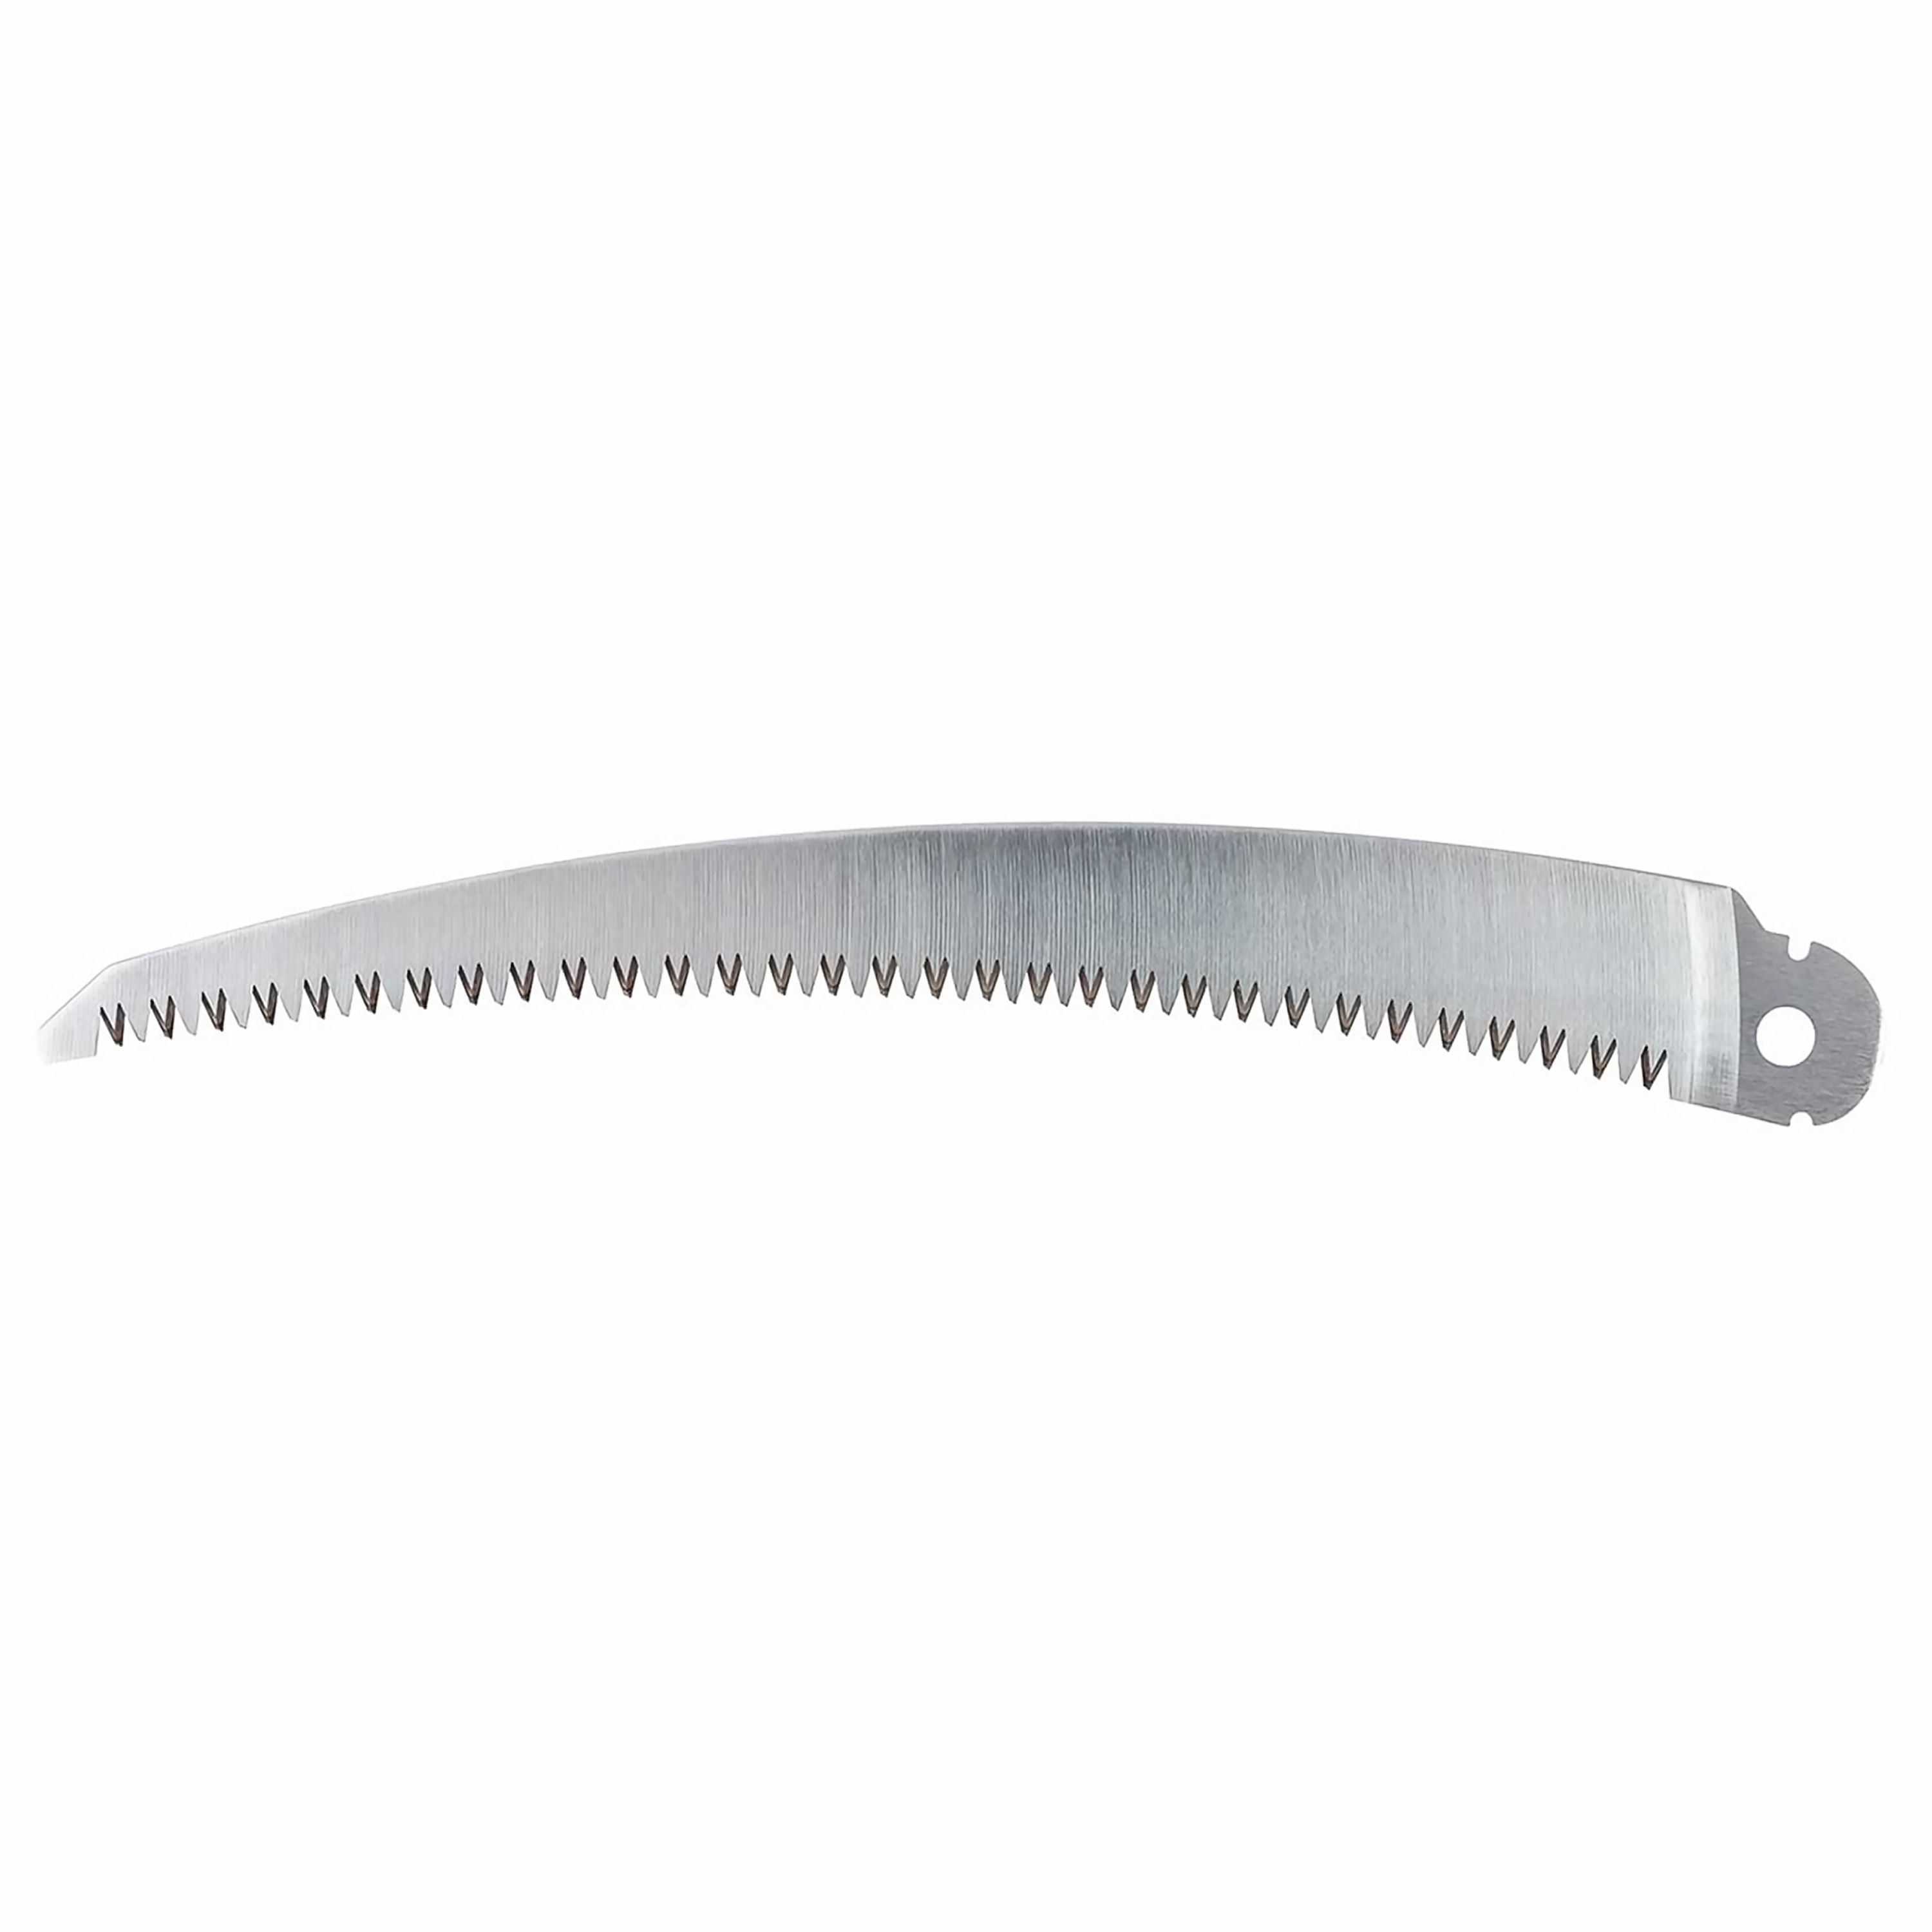 Fiskars® Pro Folding Saw Replacement Blade